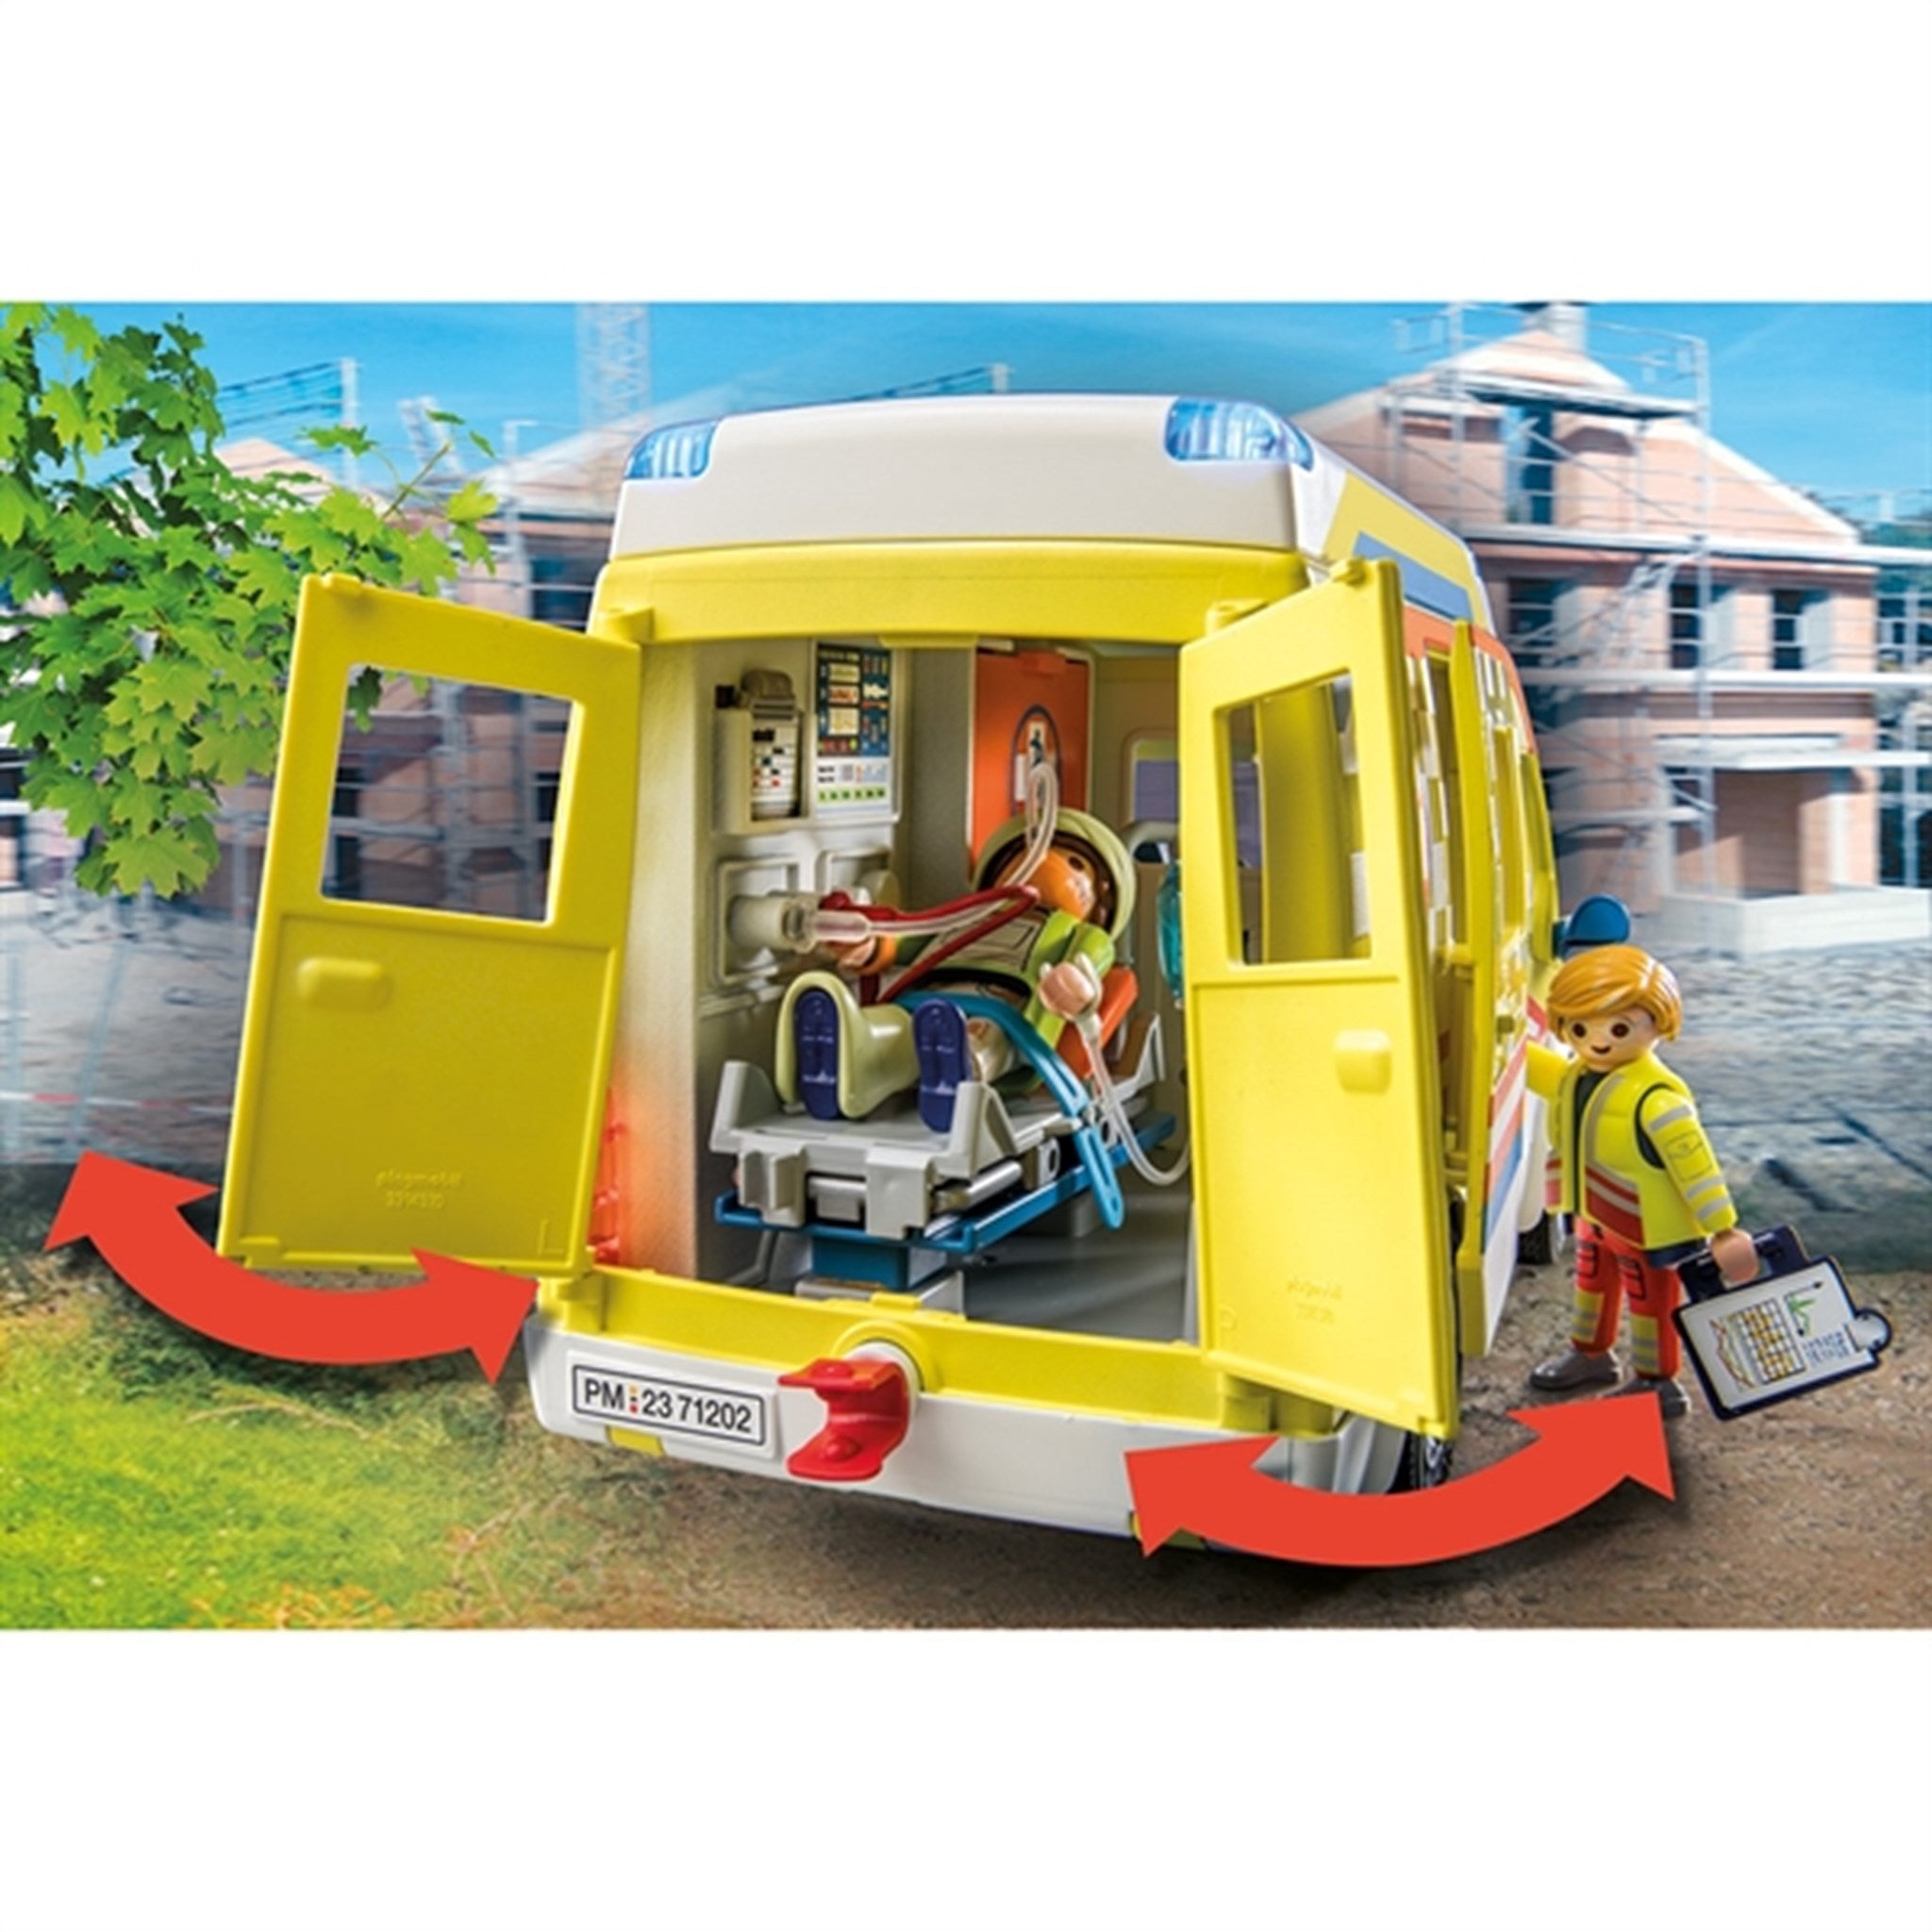 Playmobil® City Life - Ambulance with Light and Sound 3